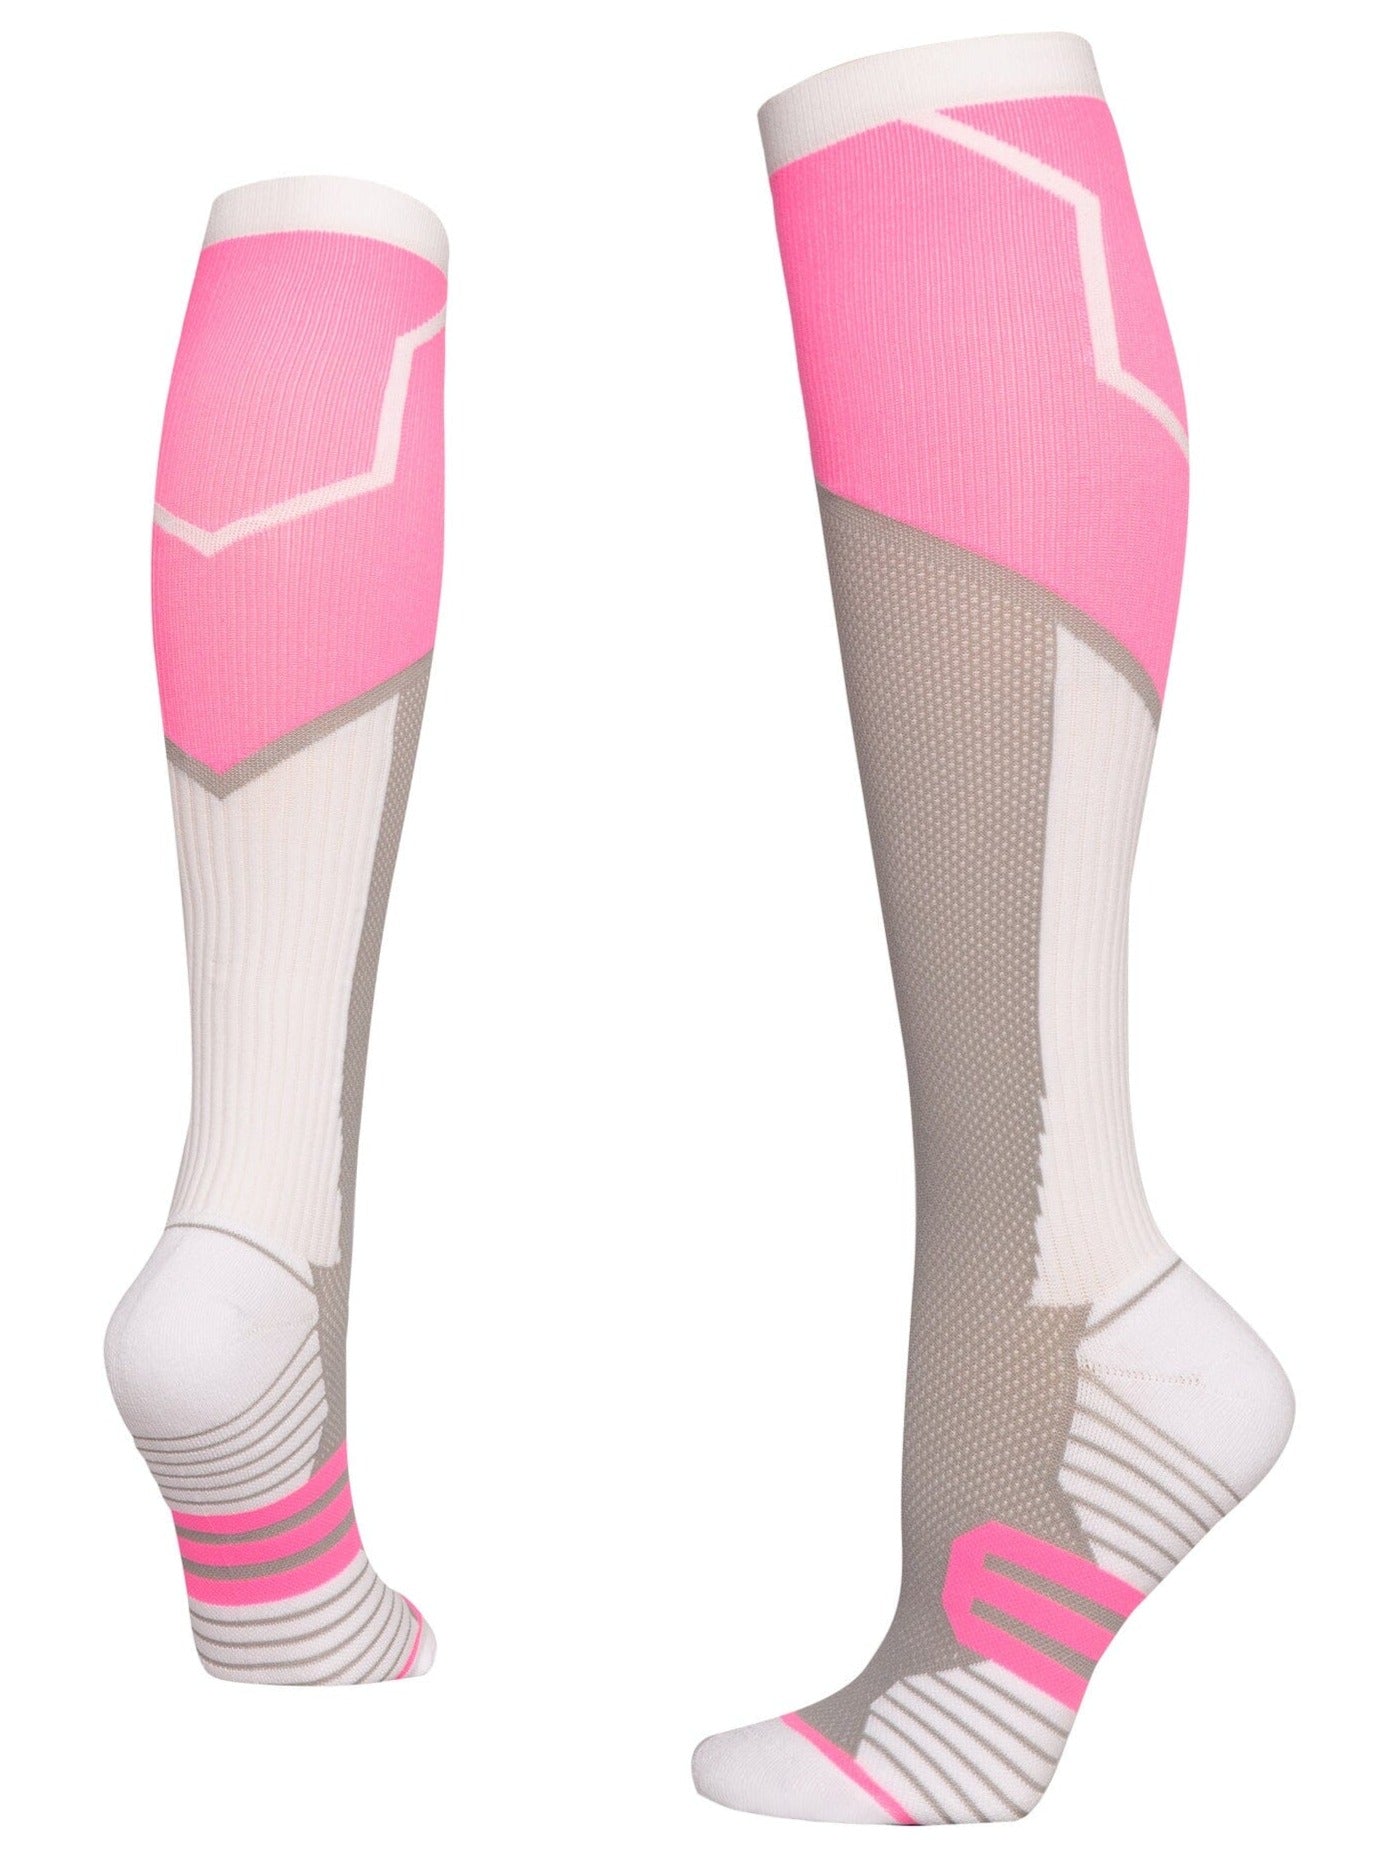 Outdoor sports pressure socks long tube skipping rope fitness calf socks sports muscles can compress socks PinchBox S/M(36-40) Pink 